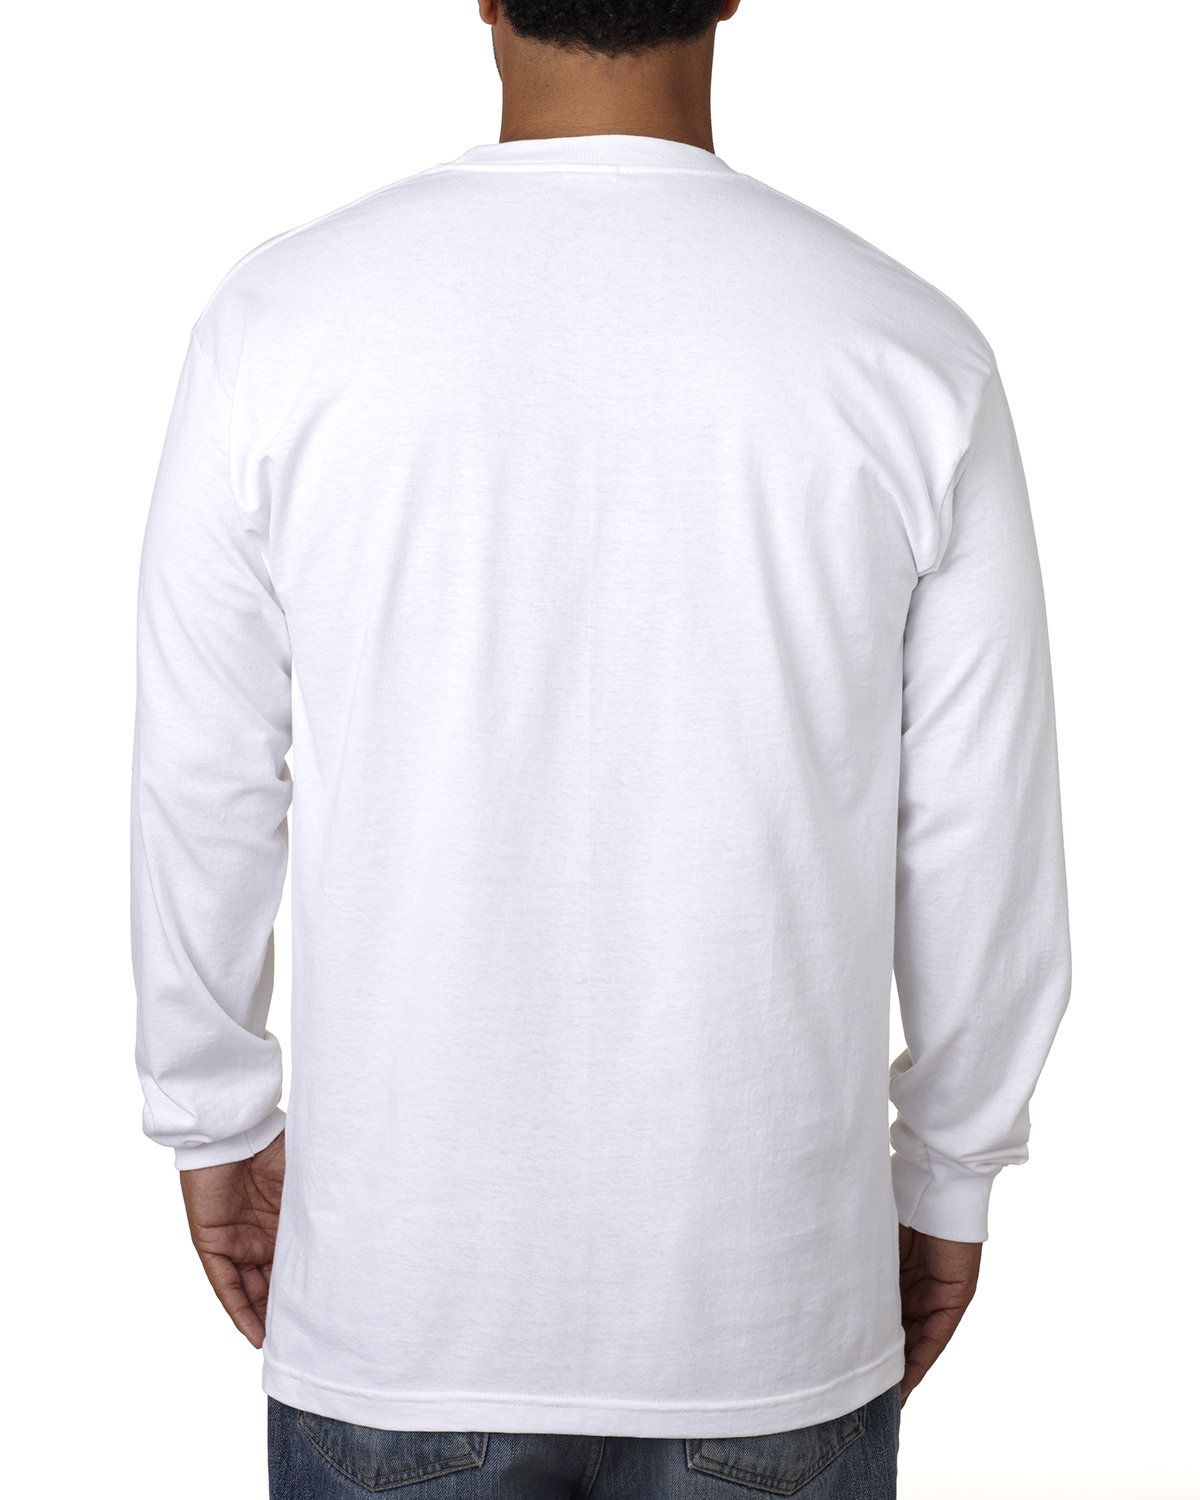 'Bayside BA5060 Adult Long-Sleeve T-Shirt'